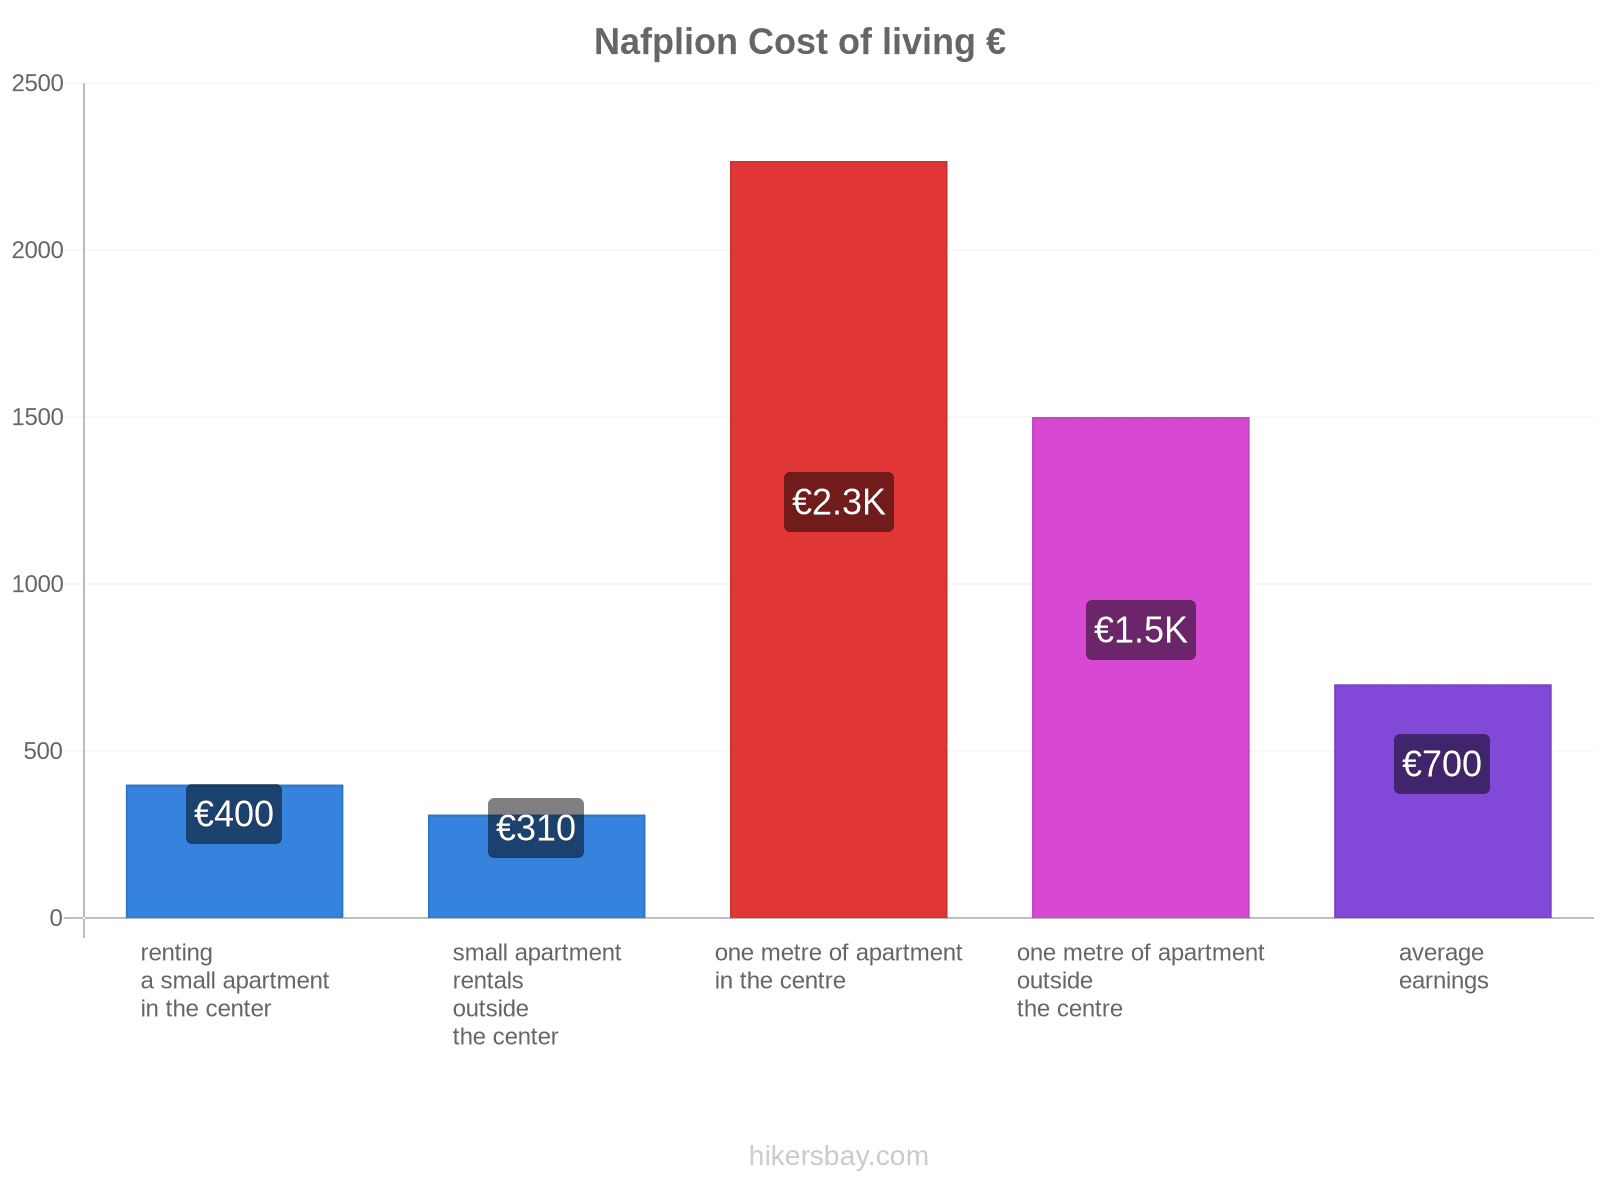 Nafplion cost of living hikersbay.com